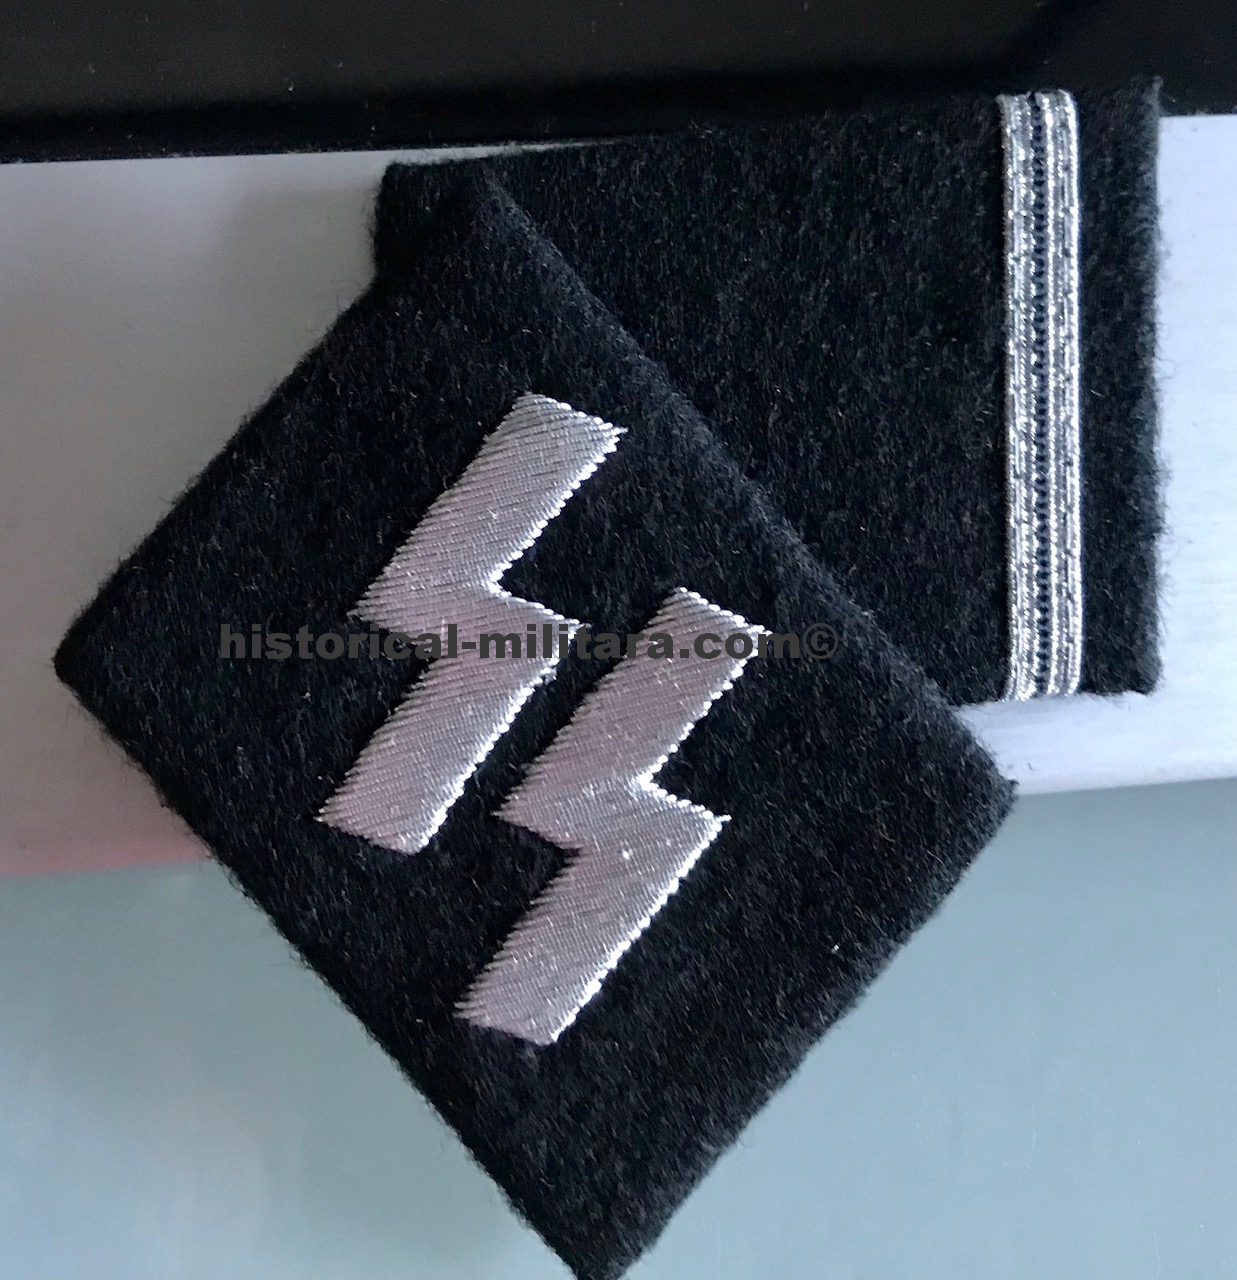 SS-Sturmmann Waffen-SS Kragenspiegel silber - Private First Class SS collar tabs silver - mostrine da Caporale delle Waffen-SS in argento - 1 pair left on stock